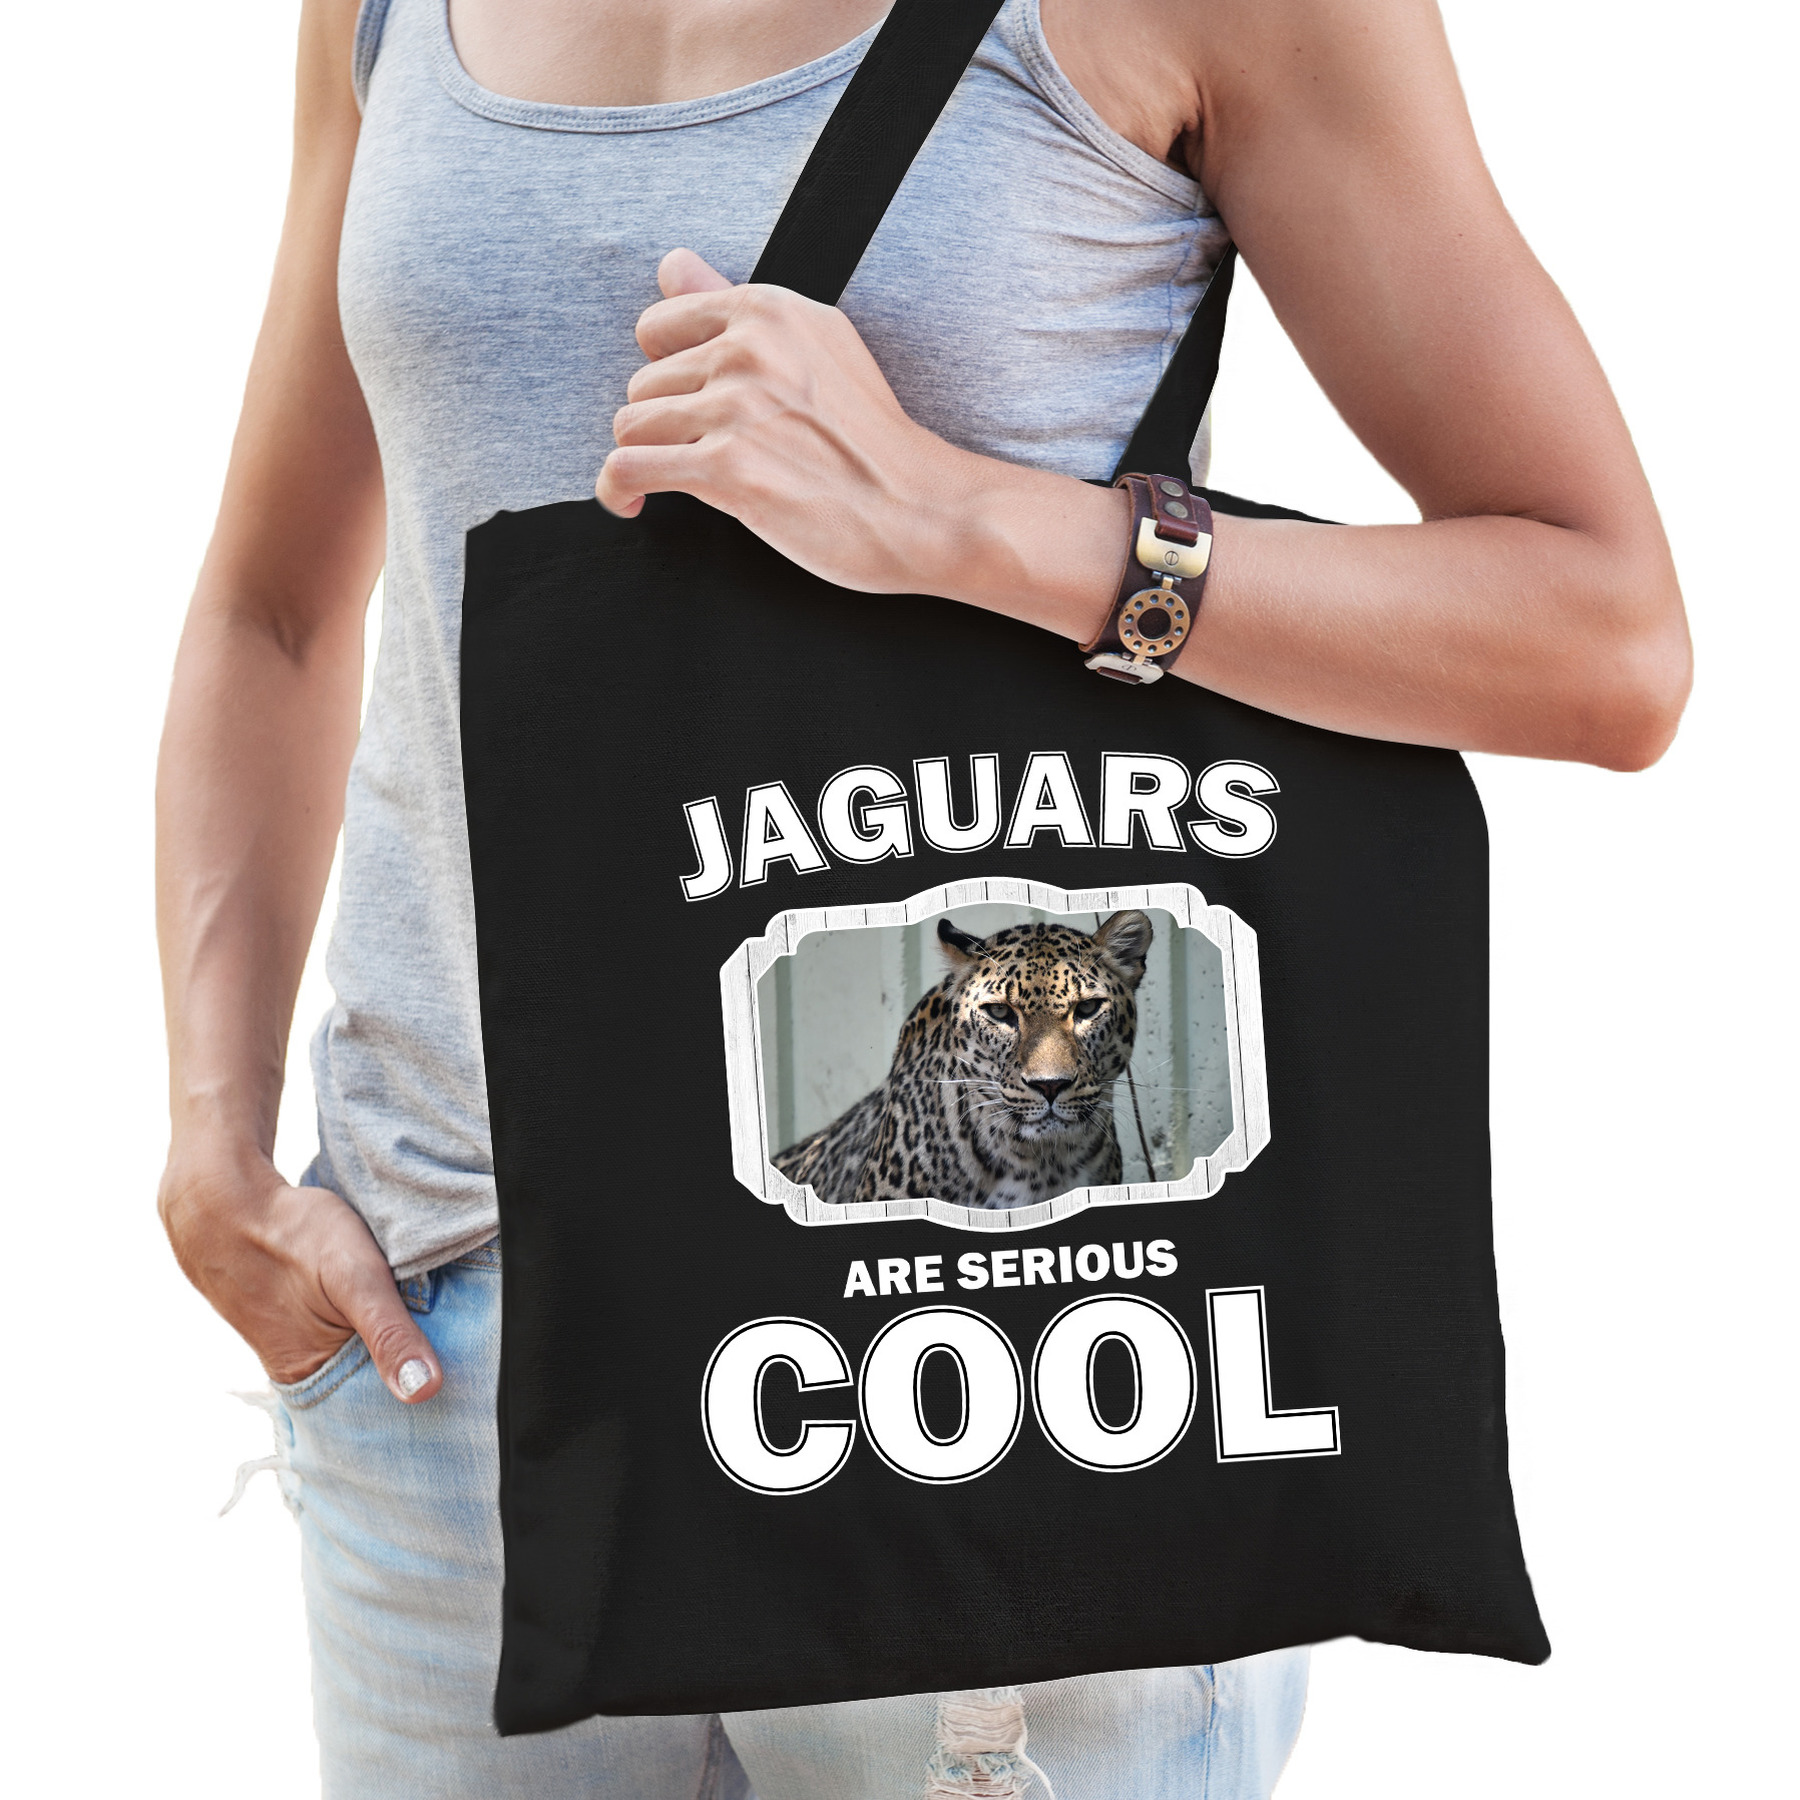 Katoenen tasje jaguars are serious cool zwart - jaguars/ gevlekte jaguar cadeau tas